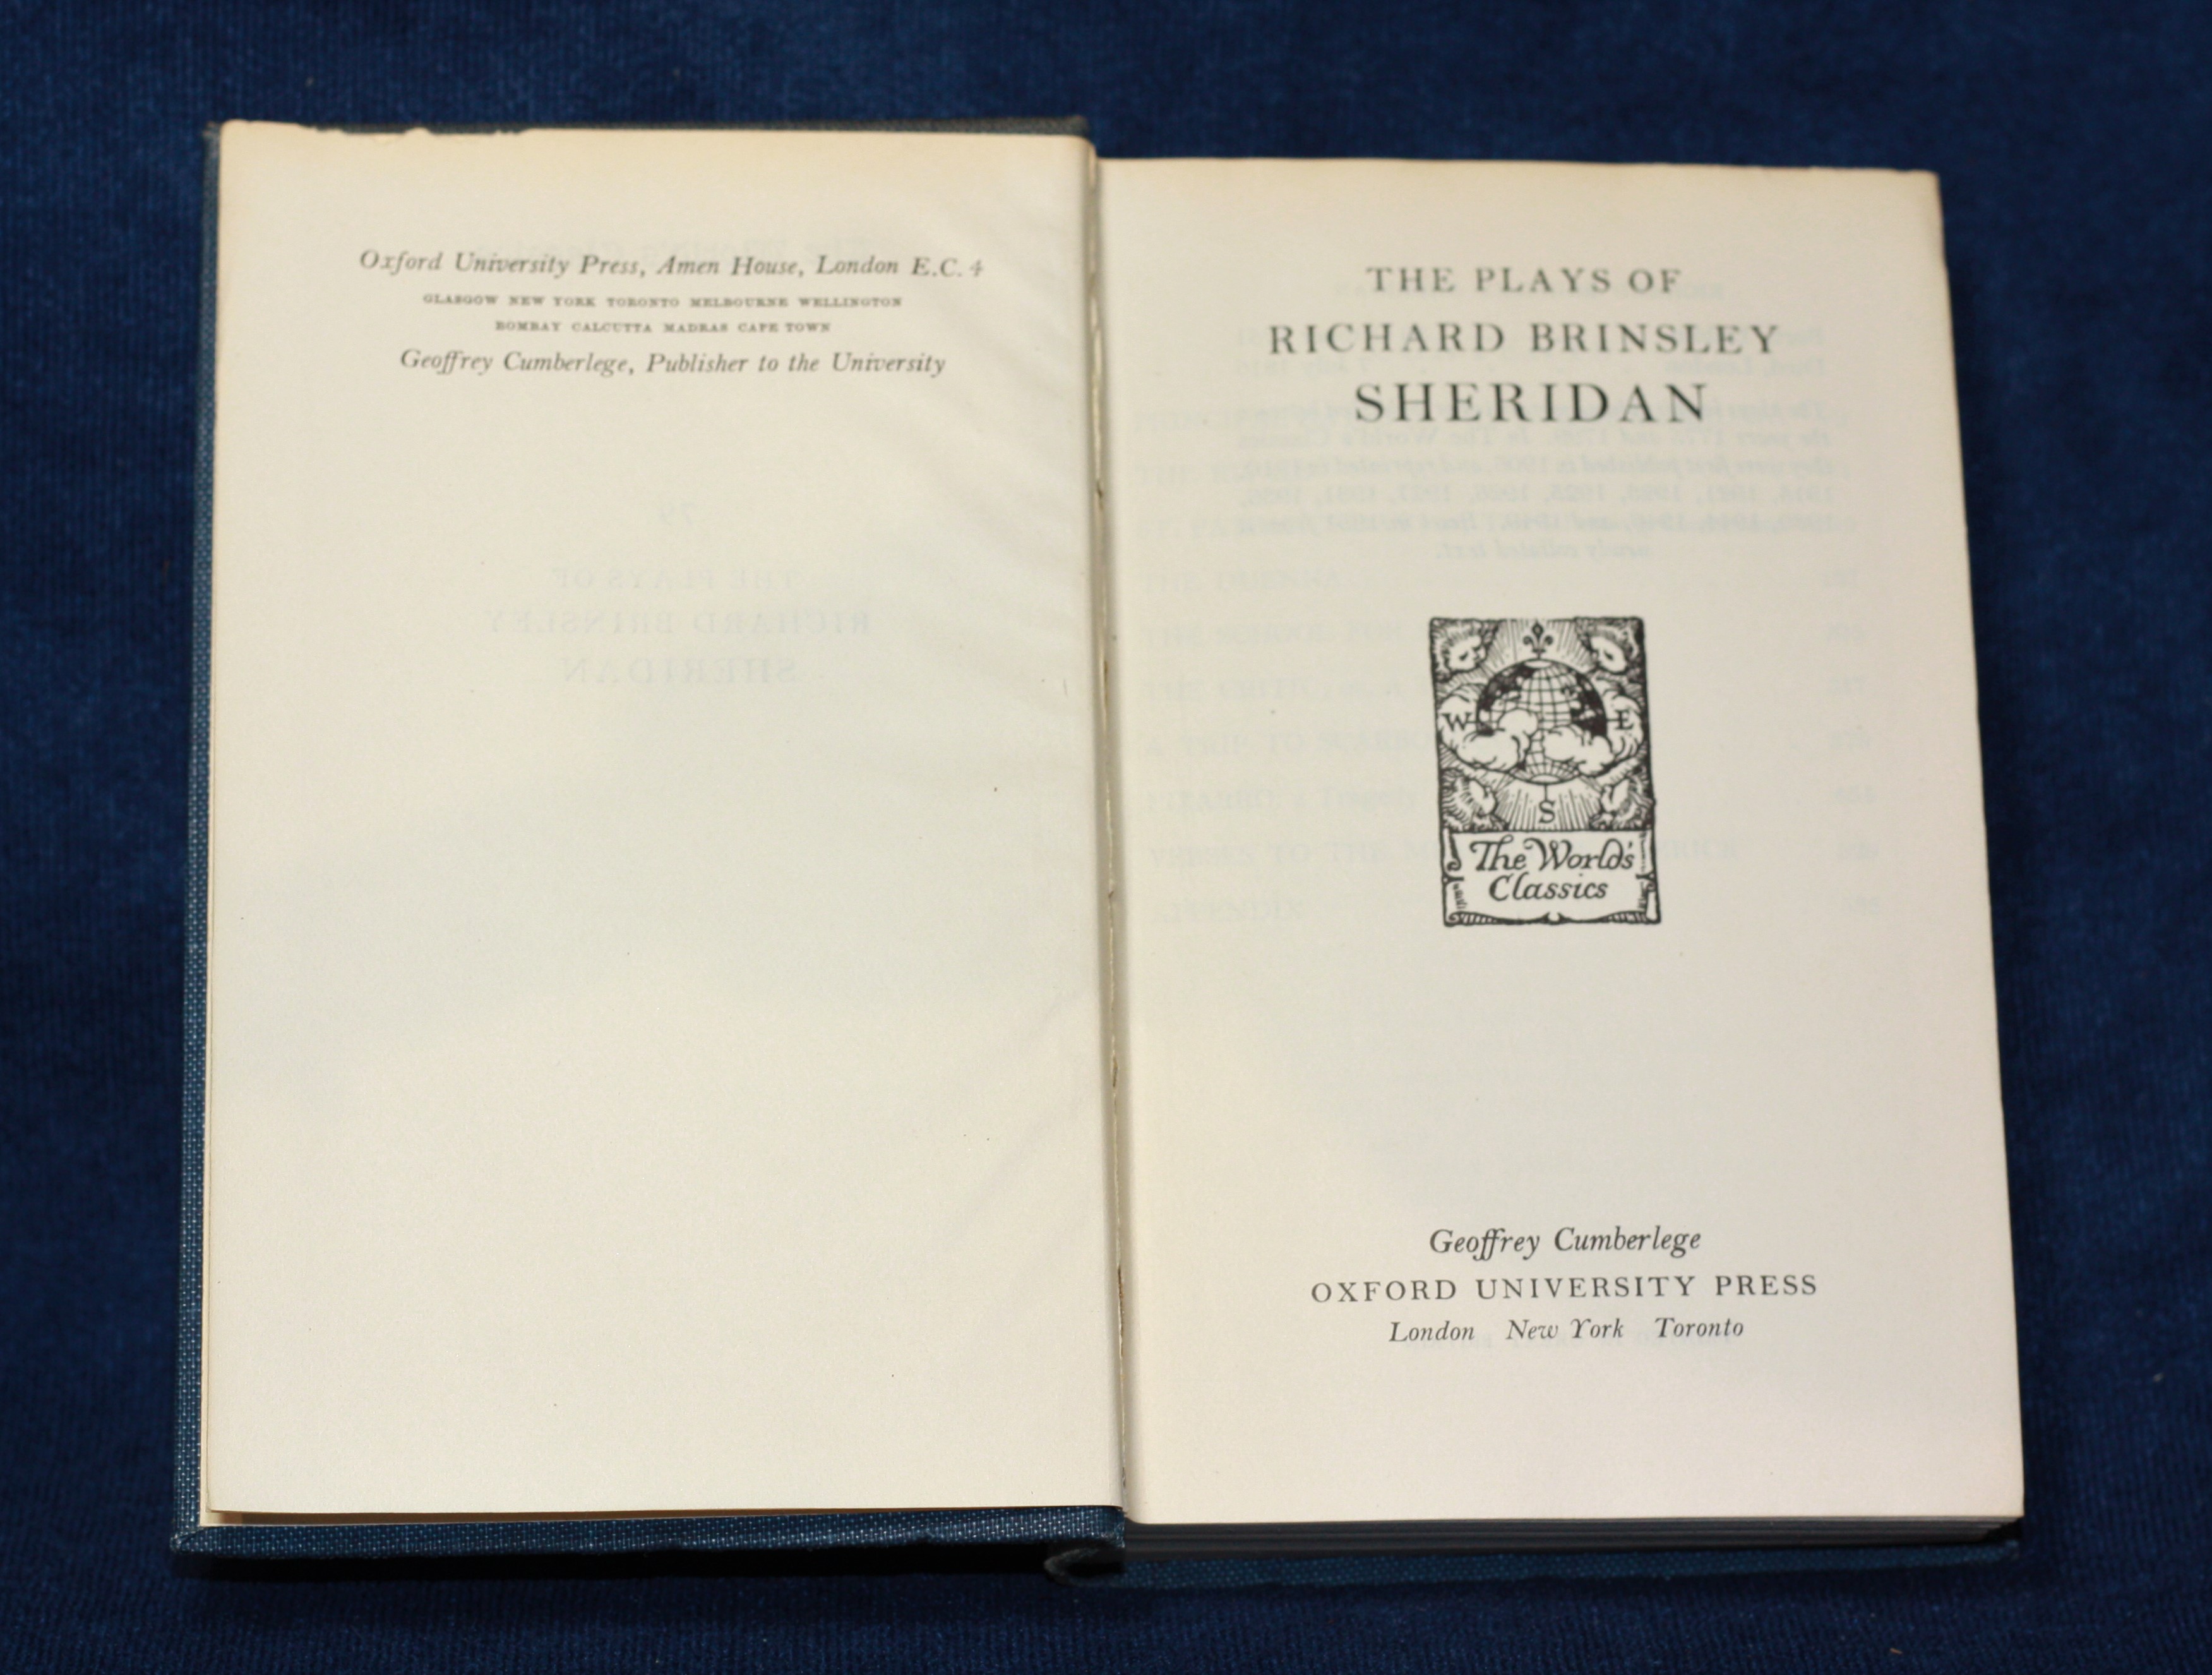 The Plays Of Richard Brinsley Sheridan - All Things UK